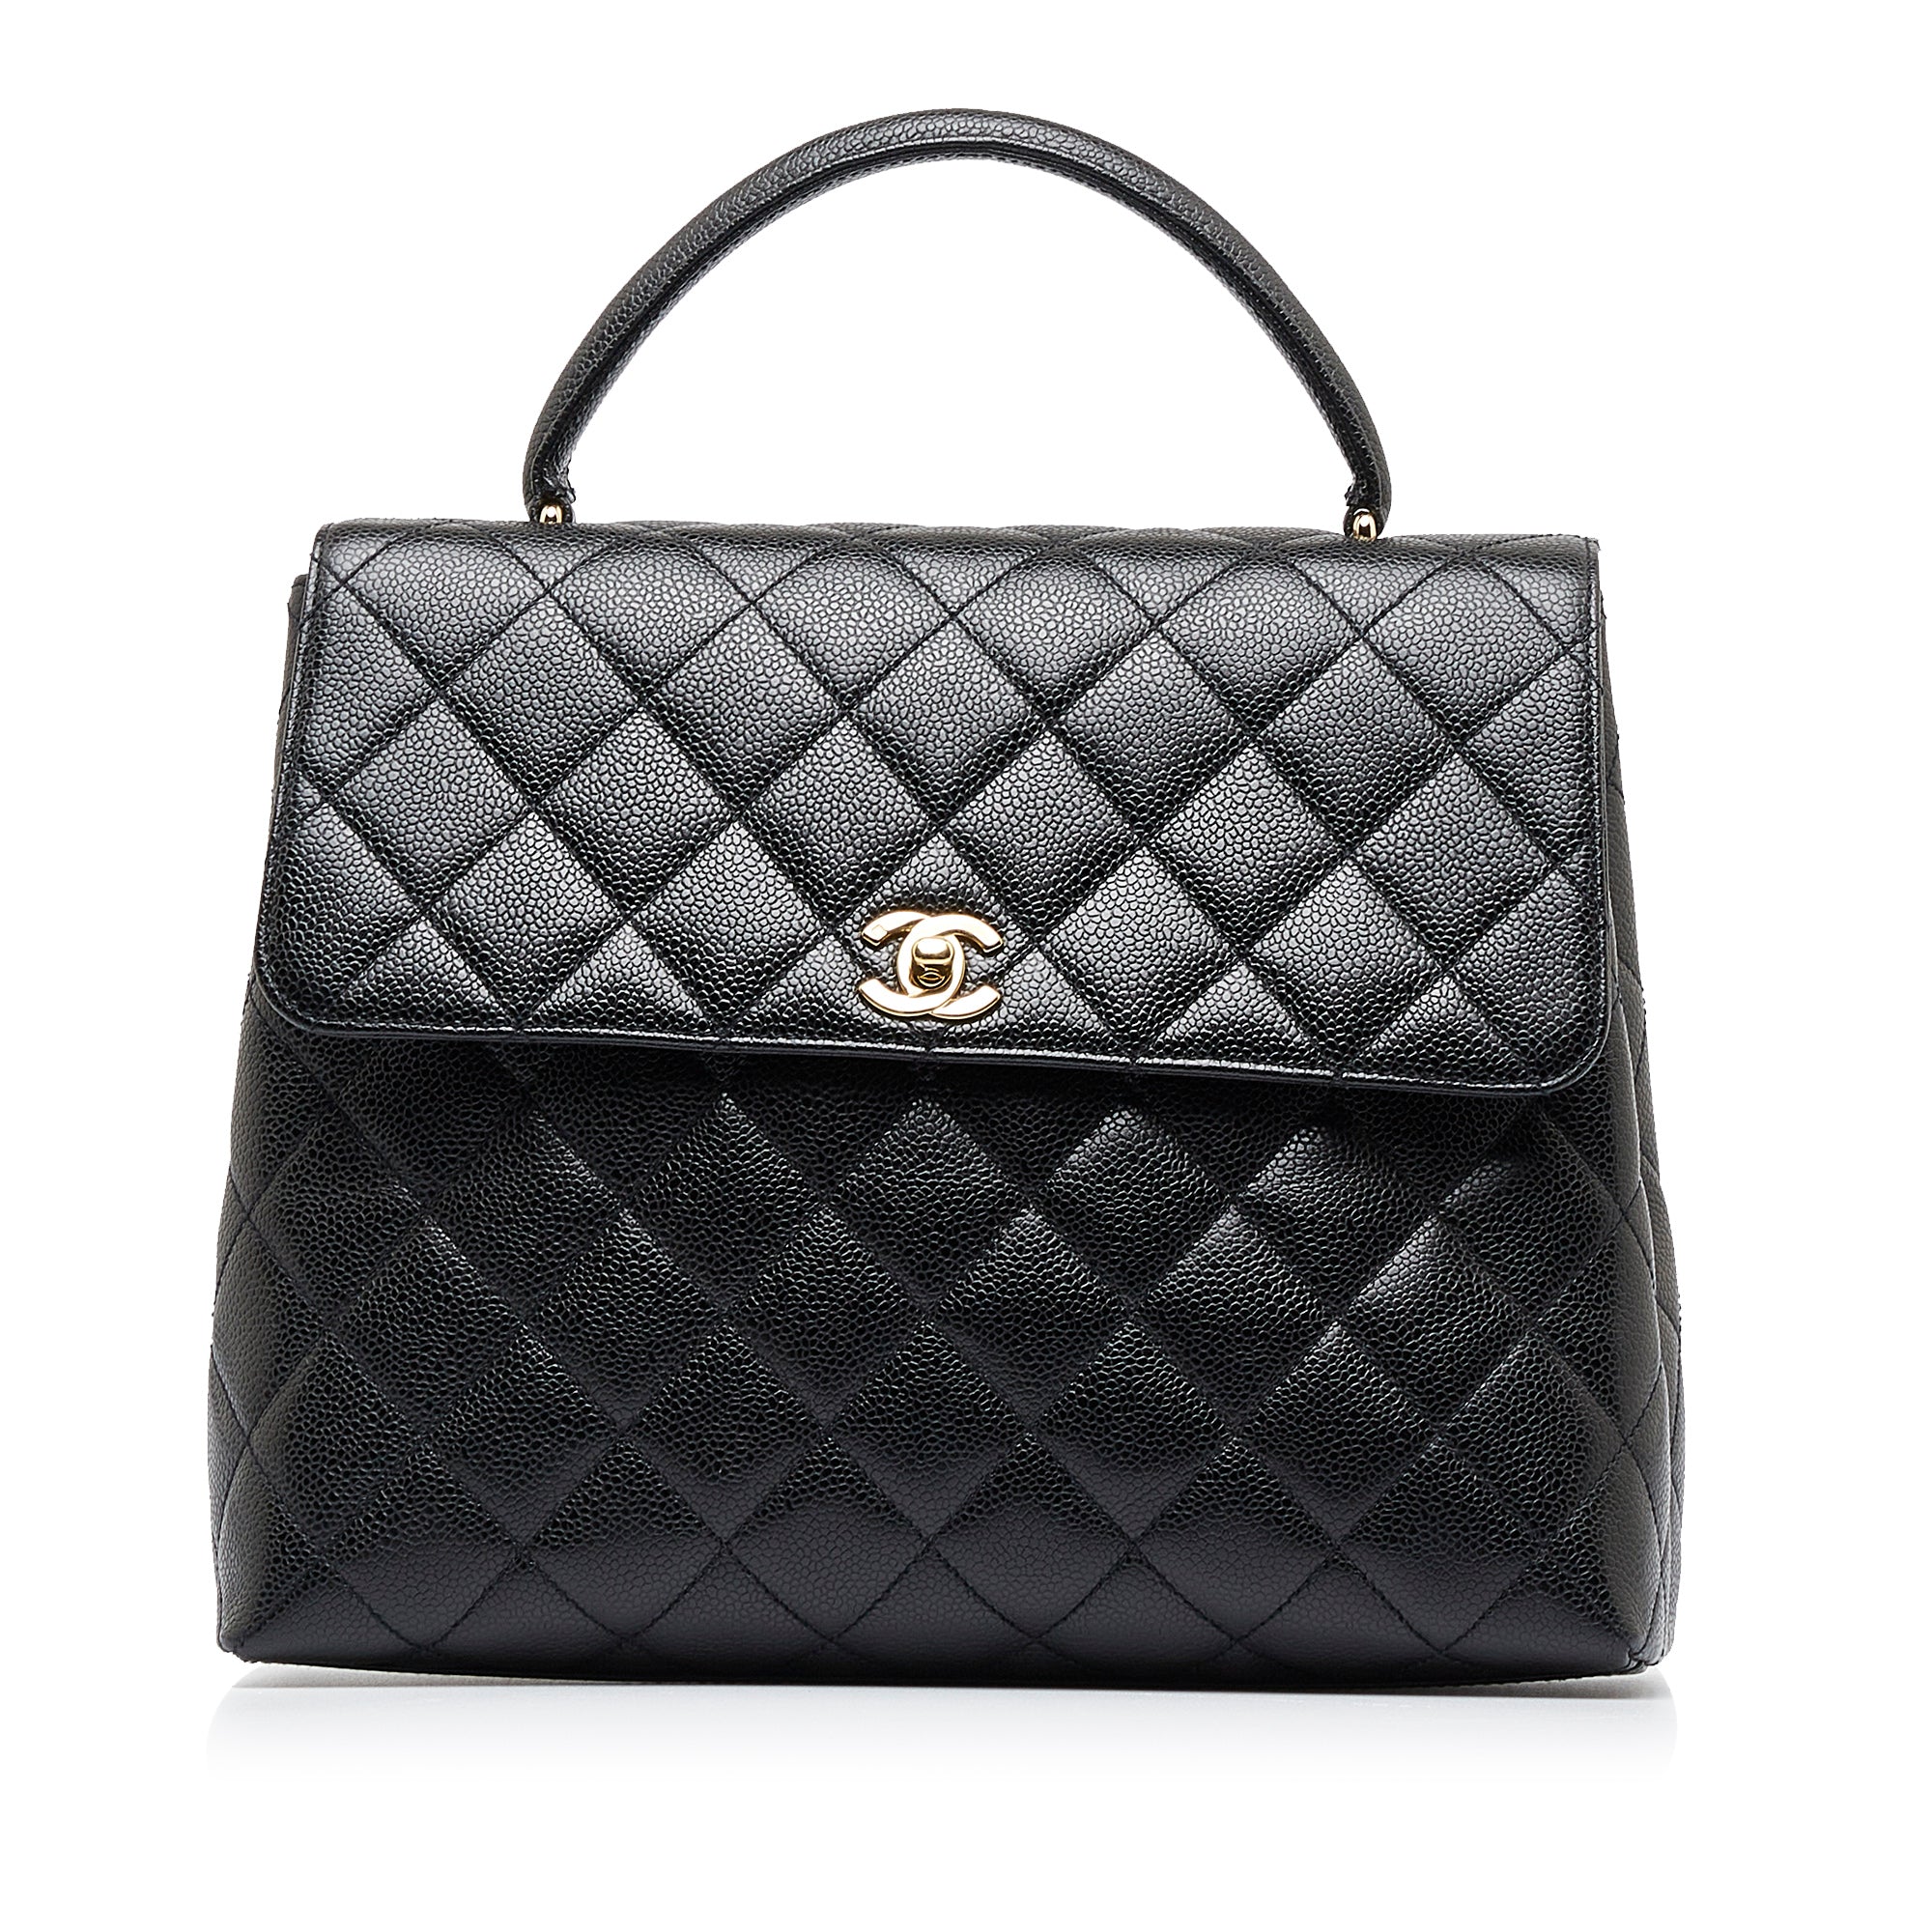 Chanel Vintage Quilted Leather Cc Push Lock Shoulder Bag